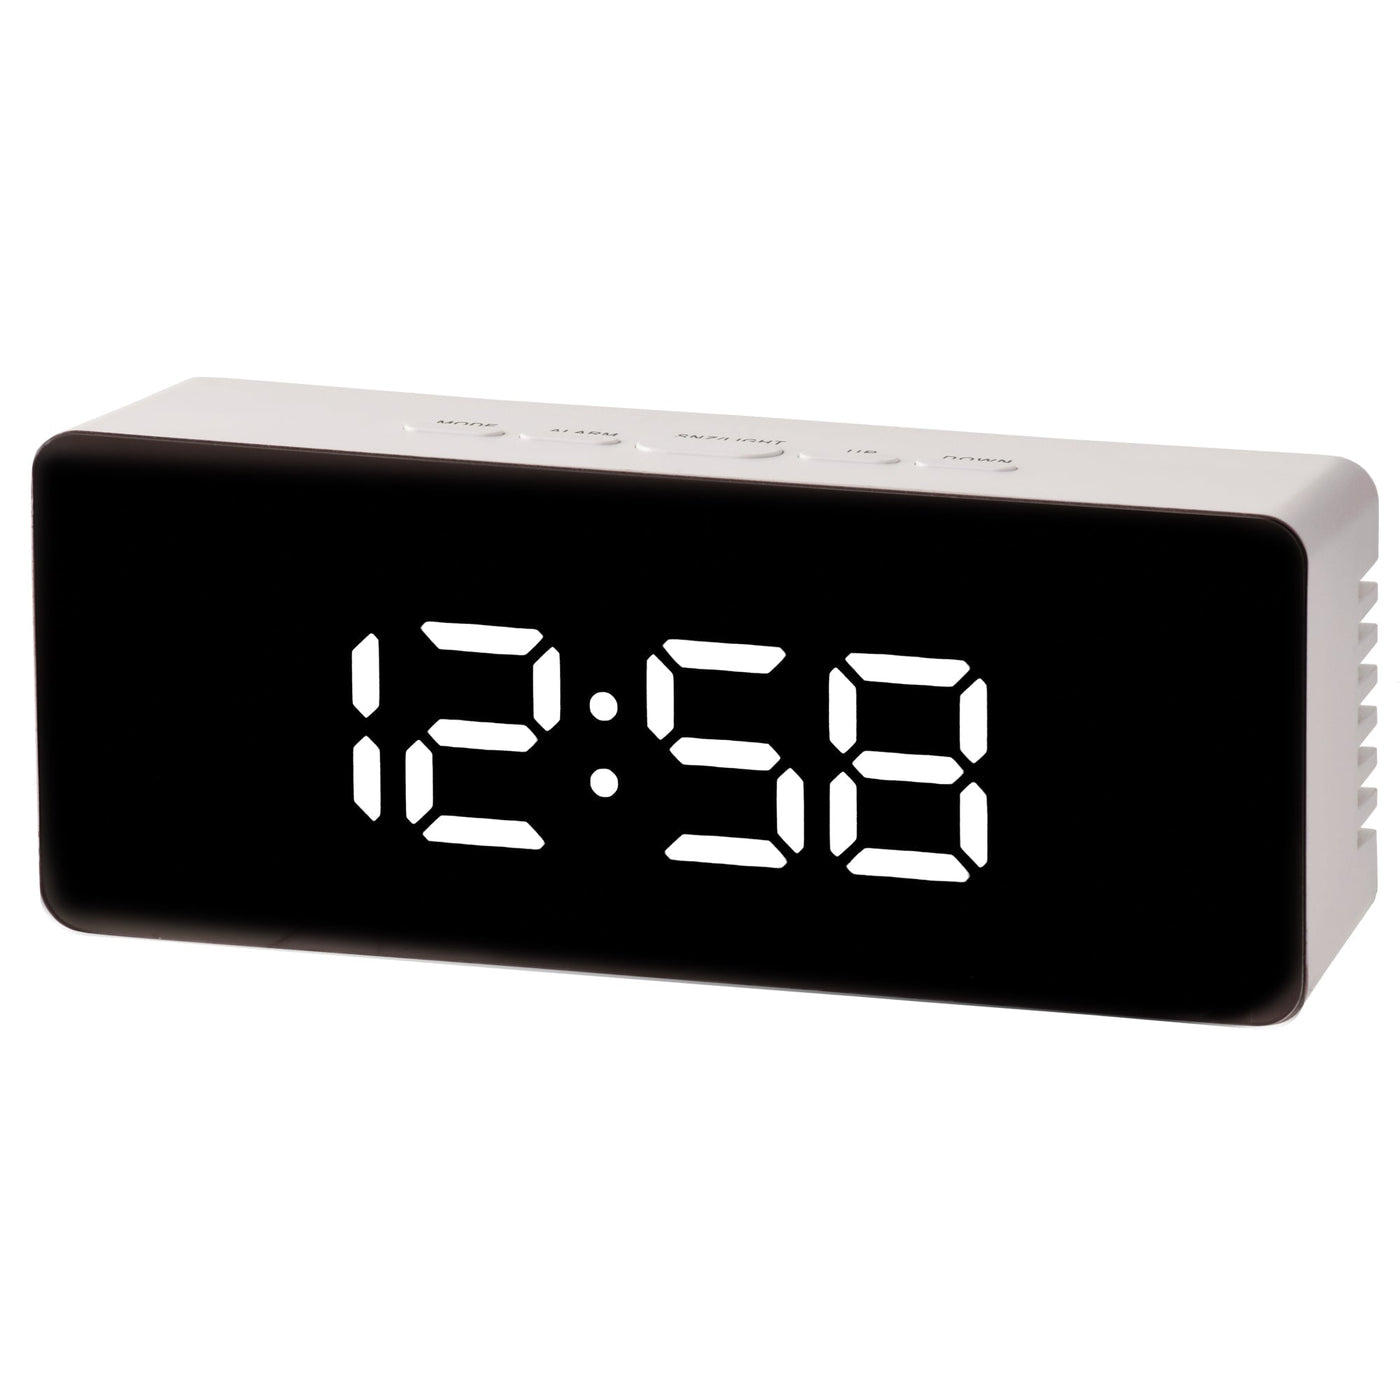 Acctim Medina Digital Mirrored Alarm Clock White *NEW* - timeframedclocks